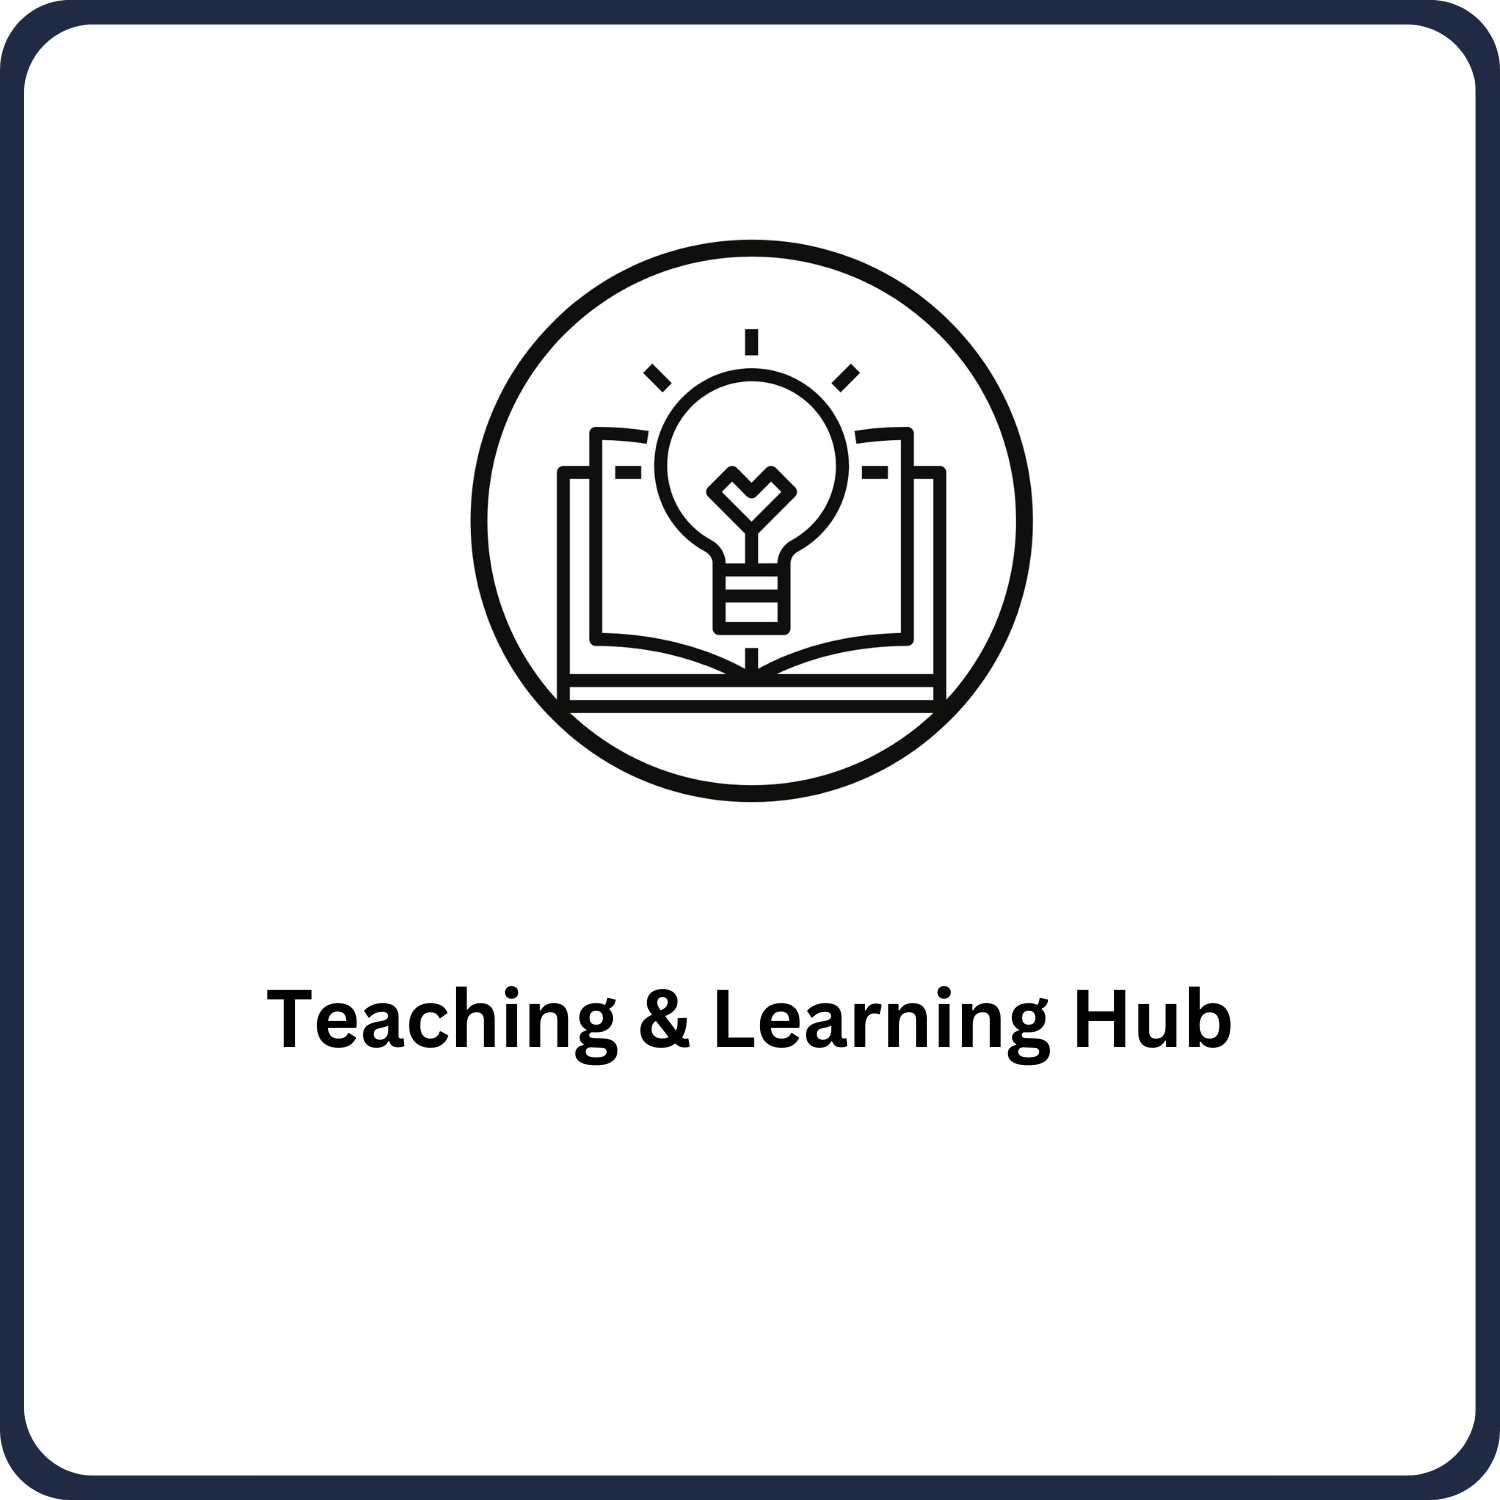 Teaching & Learning Hub